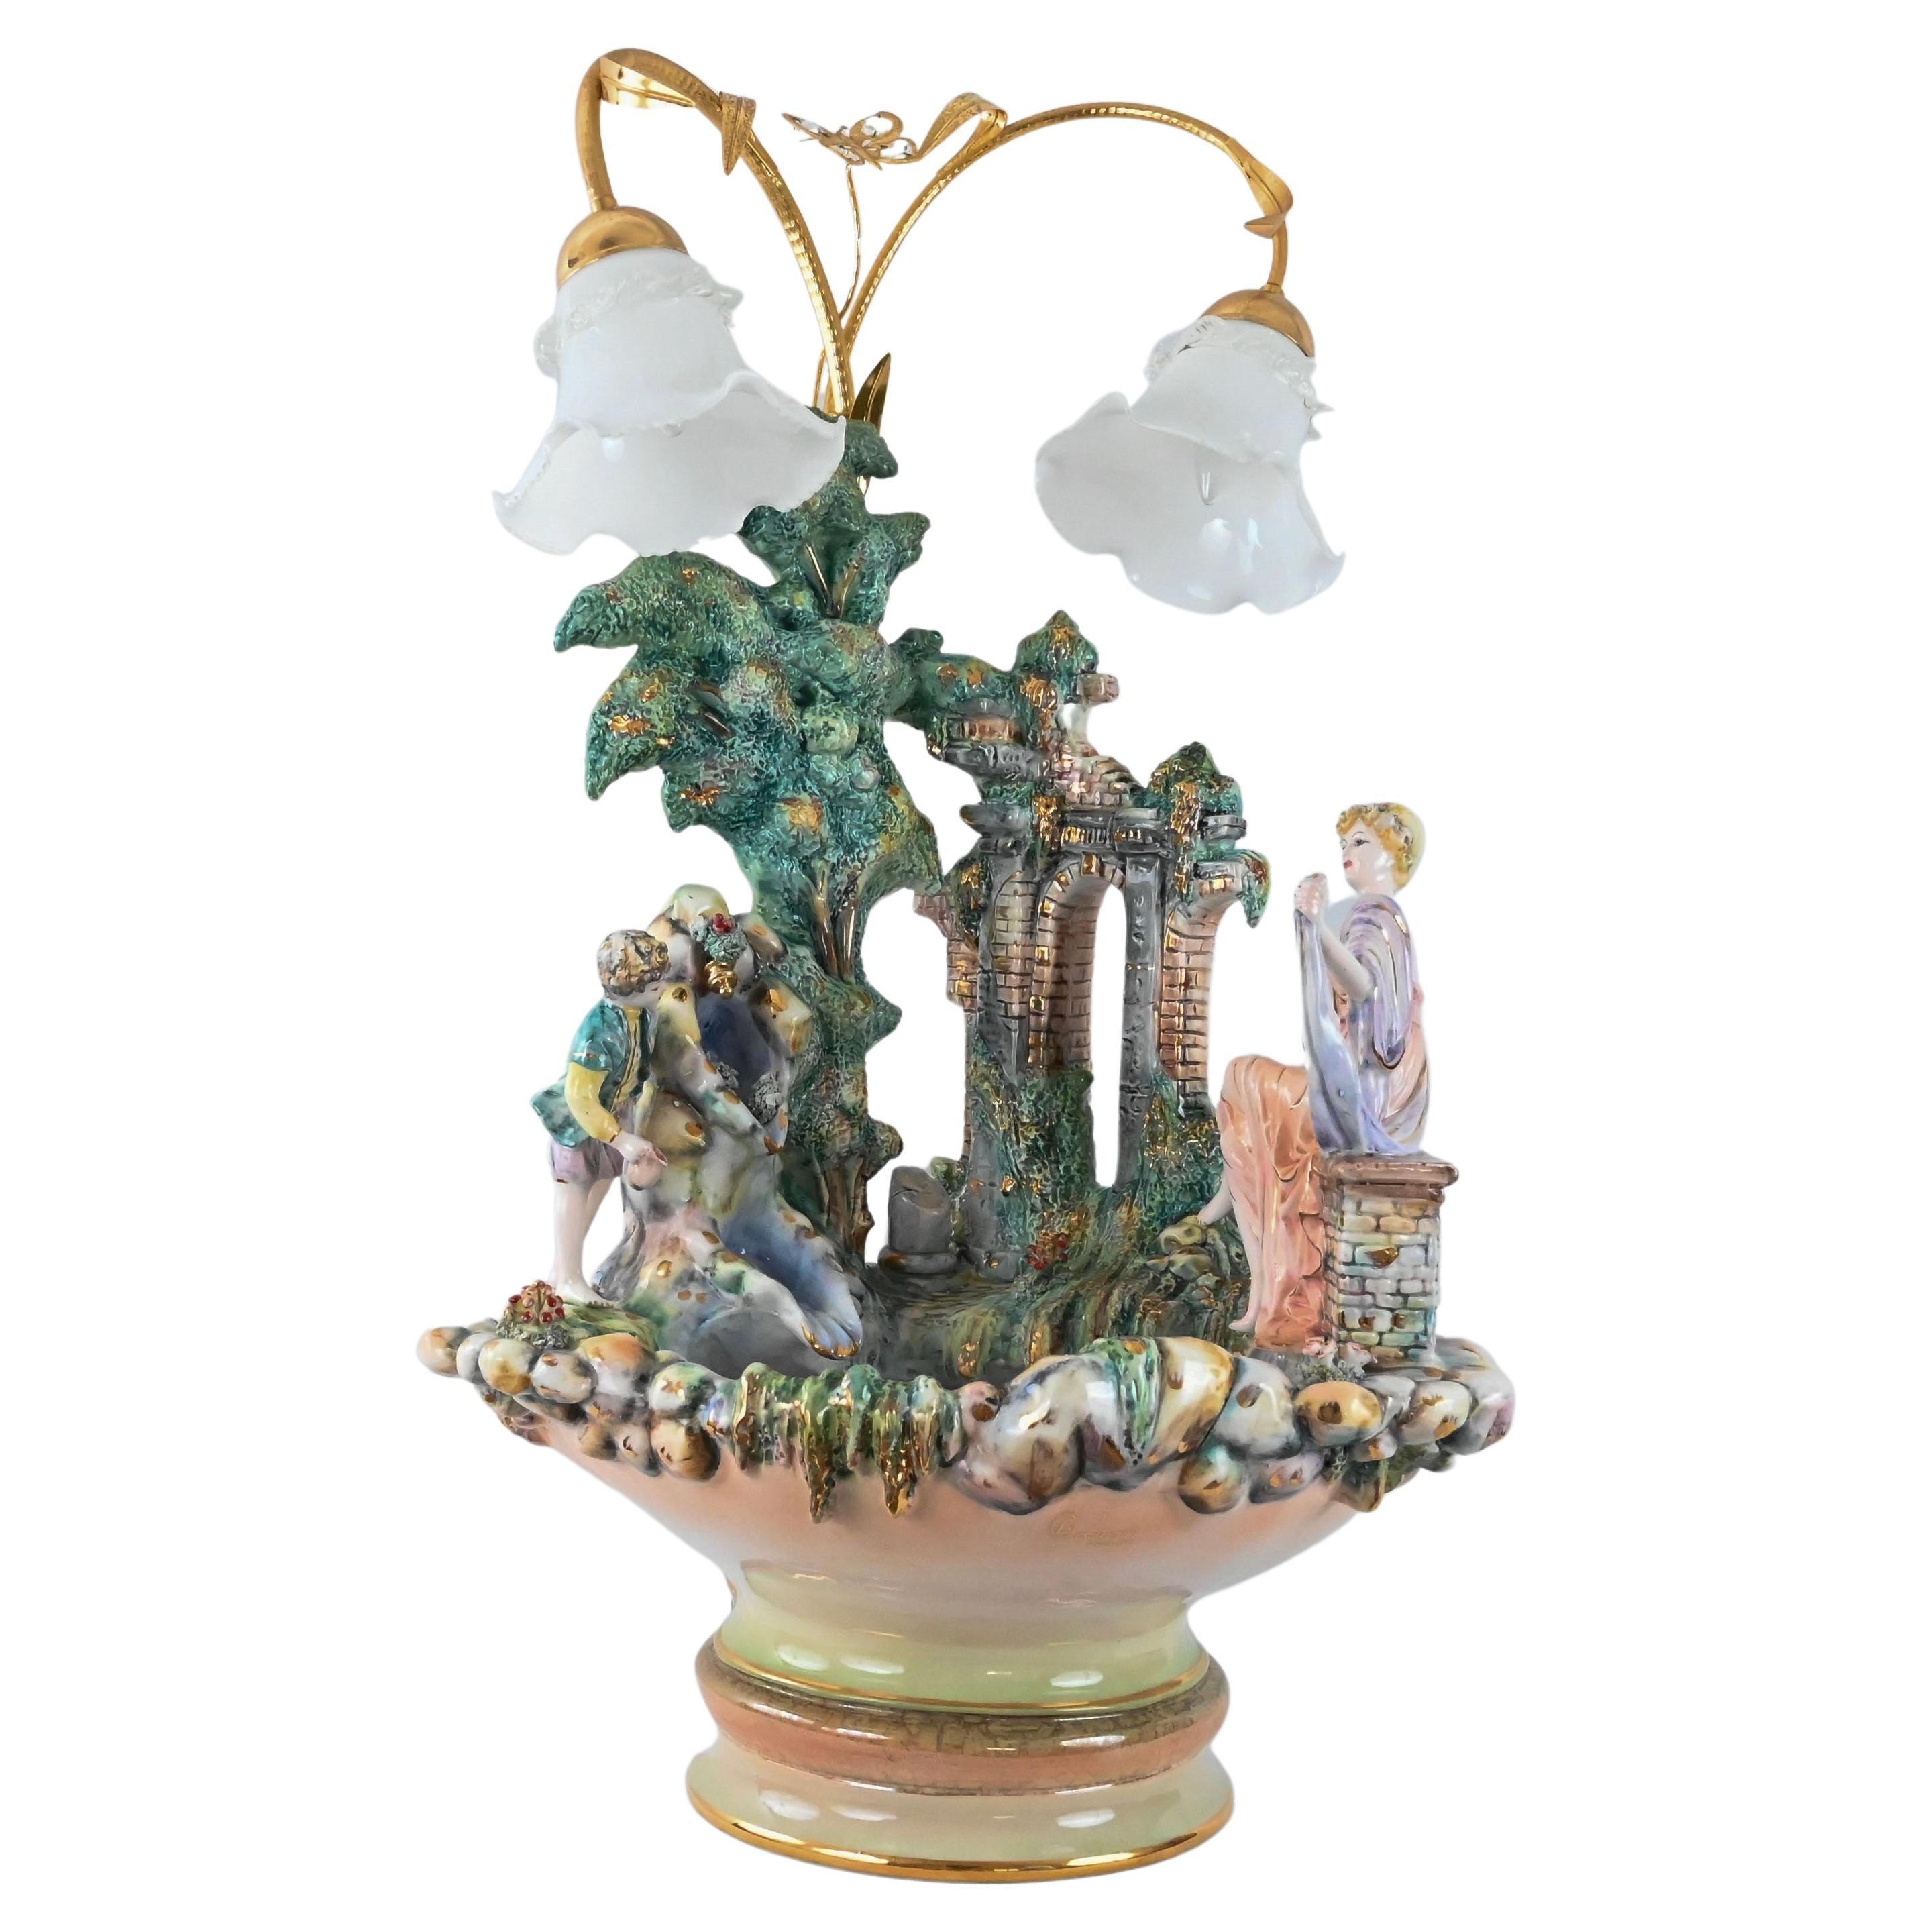 Gianni Lorenzon Italian Porcelain Illuminated Water Fountain Light or Bird Bath